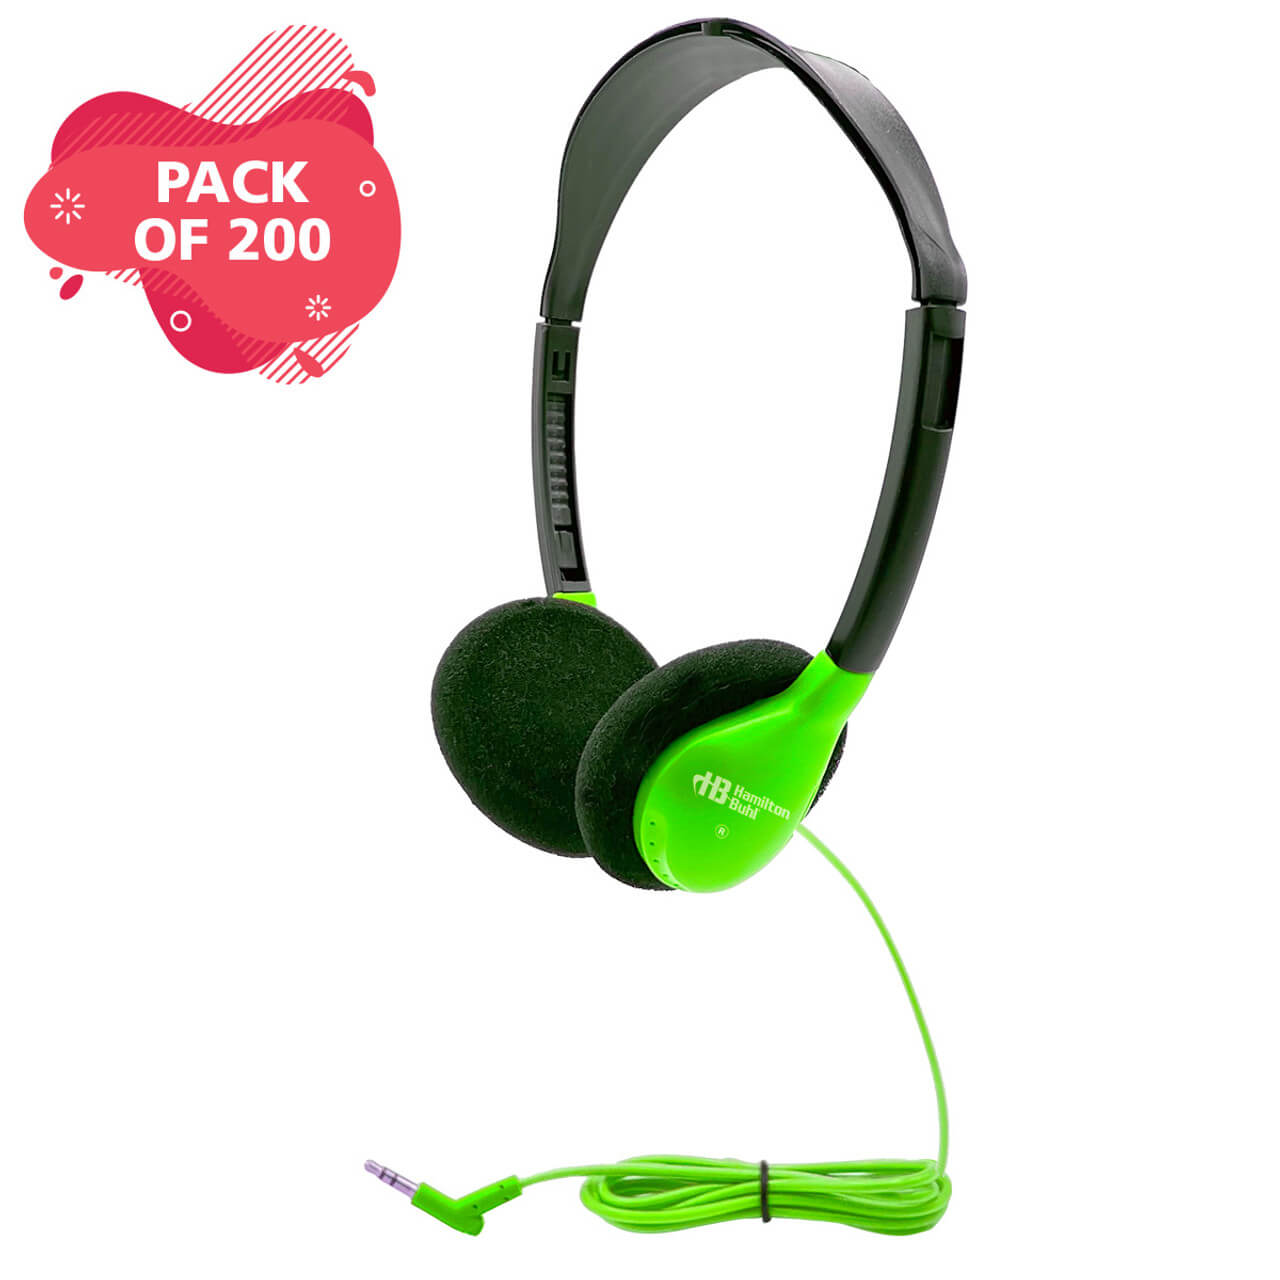 HamiltonBuhl Personal On-Ear Stereo Headphone, GREEN - 200 Pack